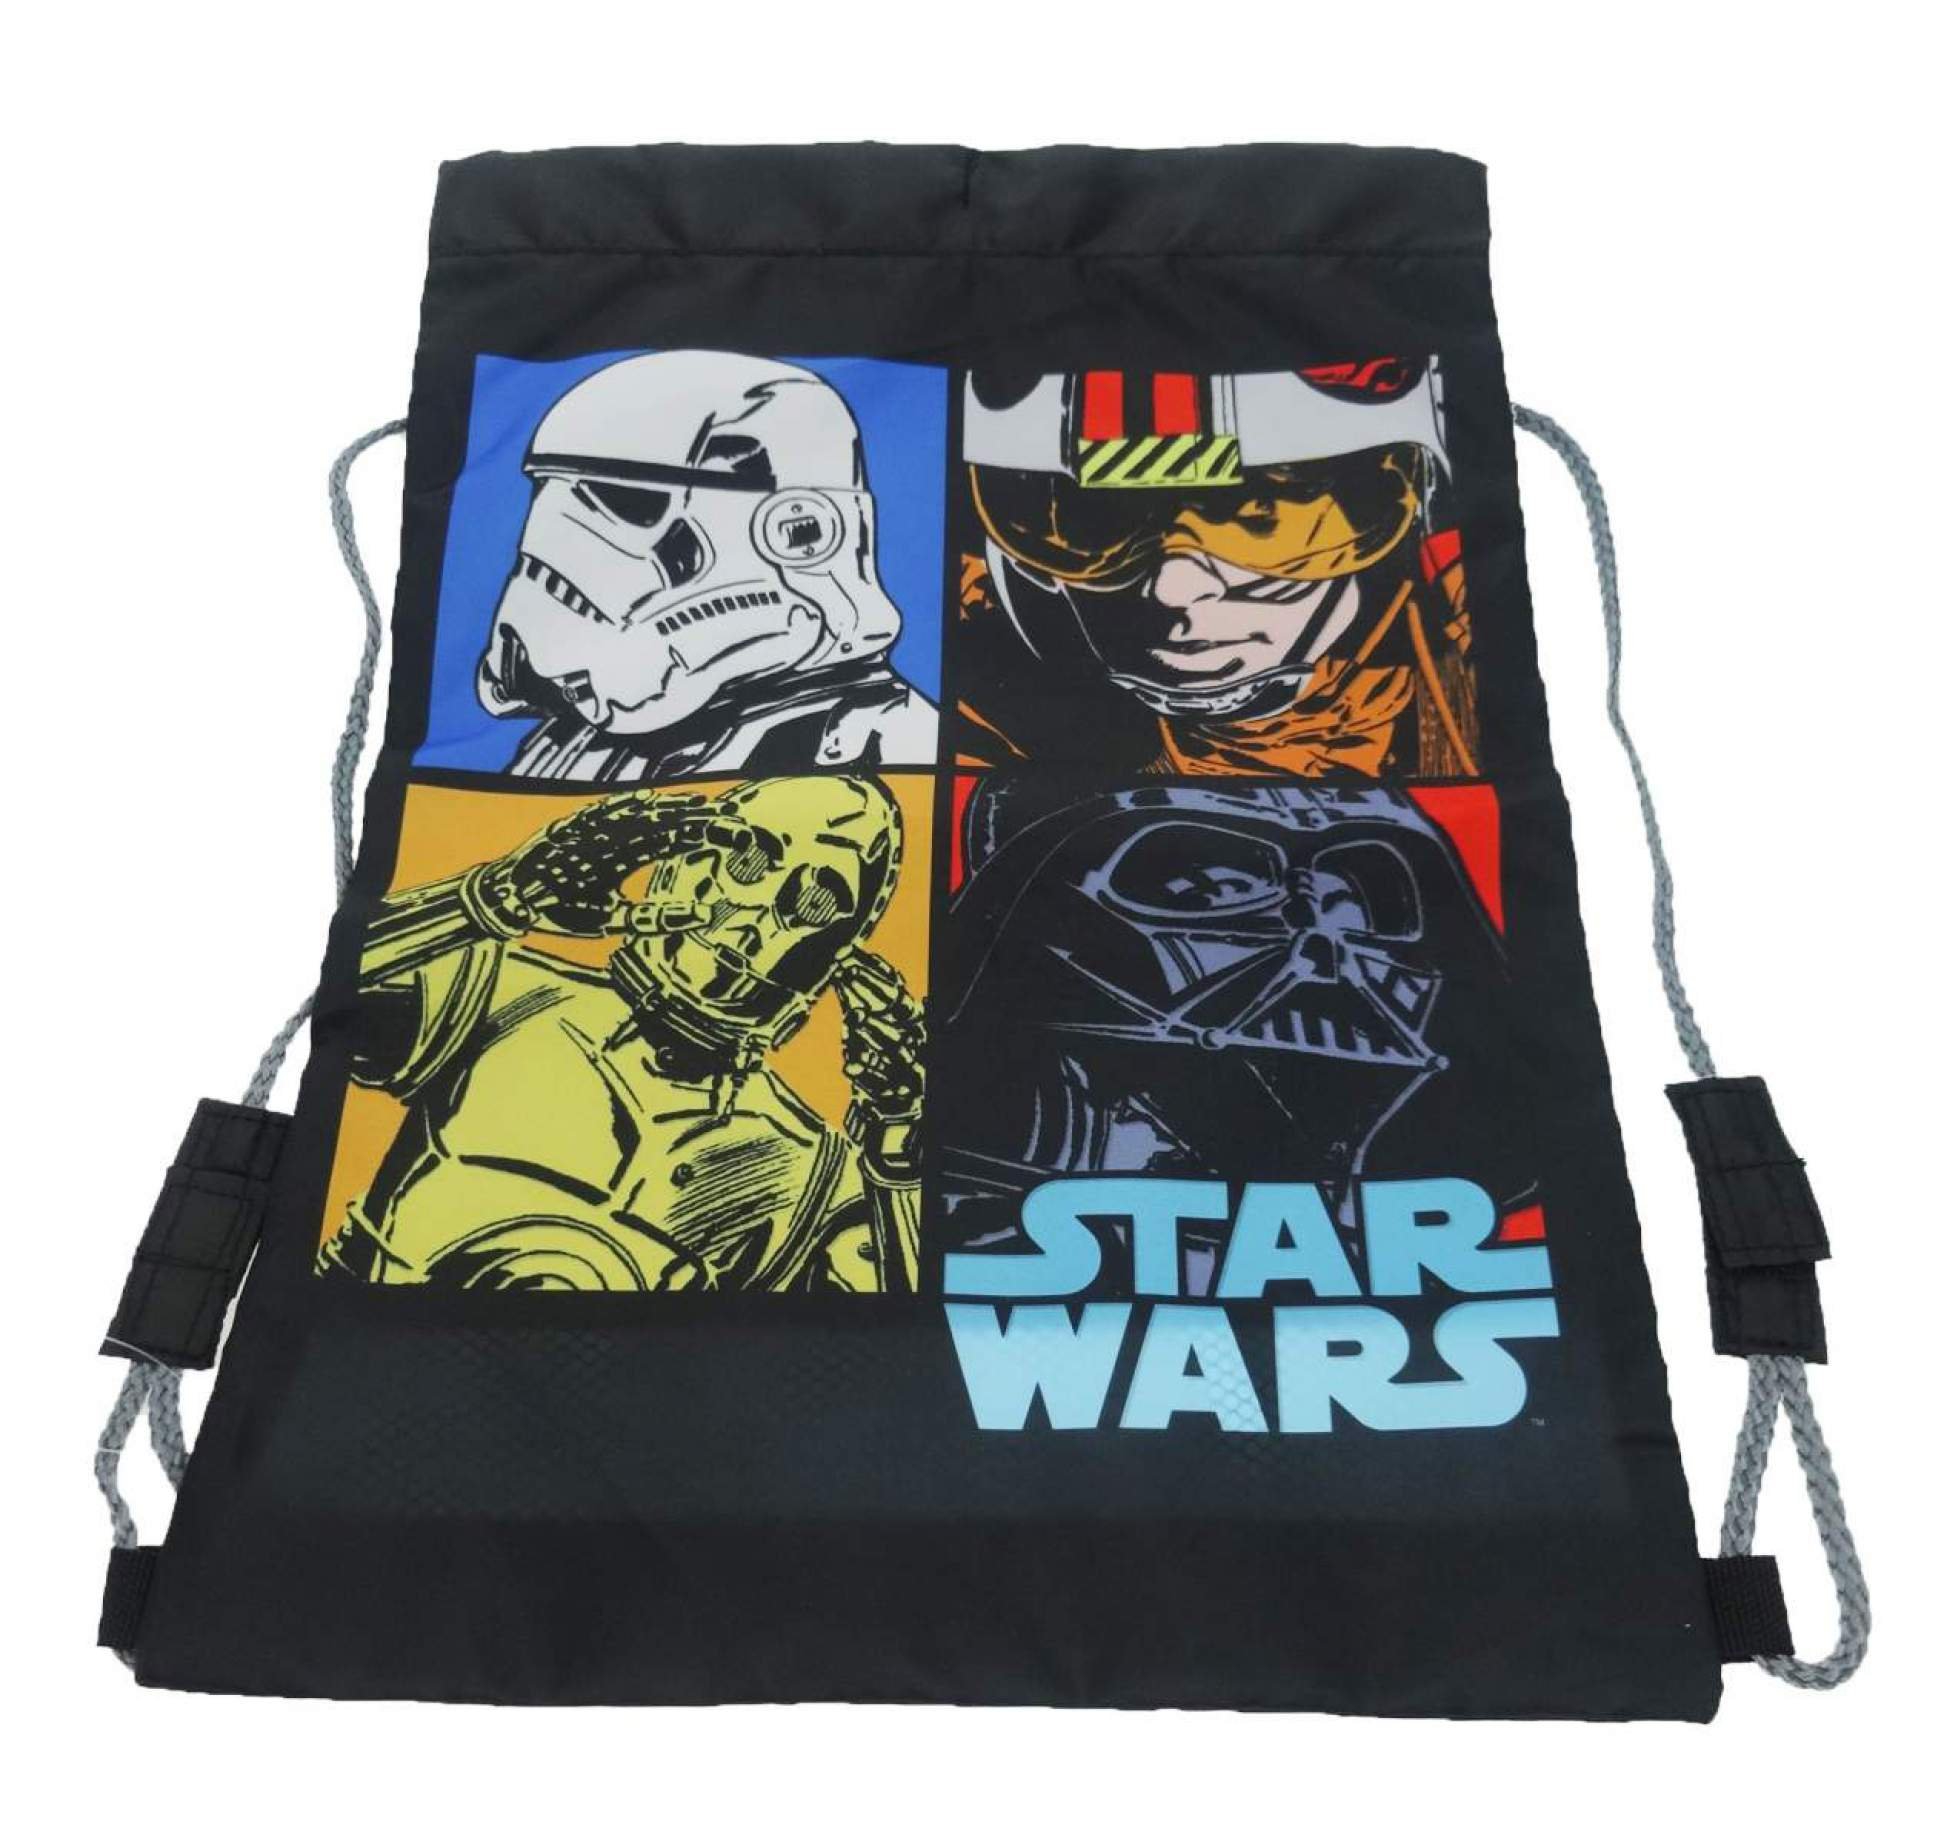 Star Wars Classic Comic Trainer School Bag